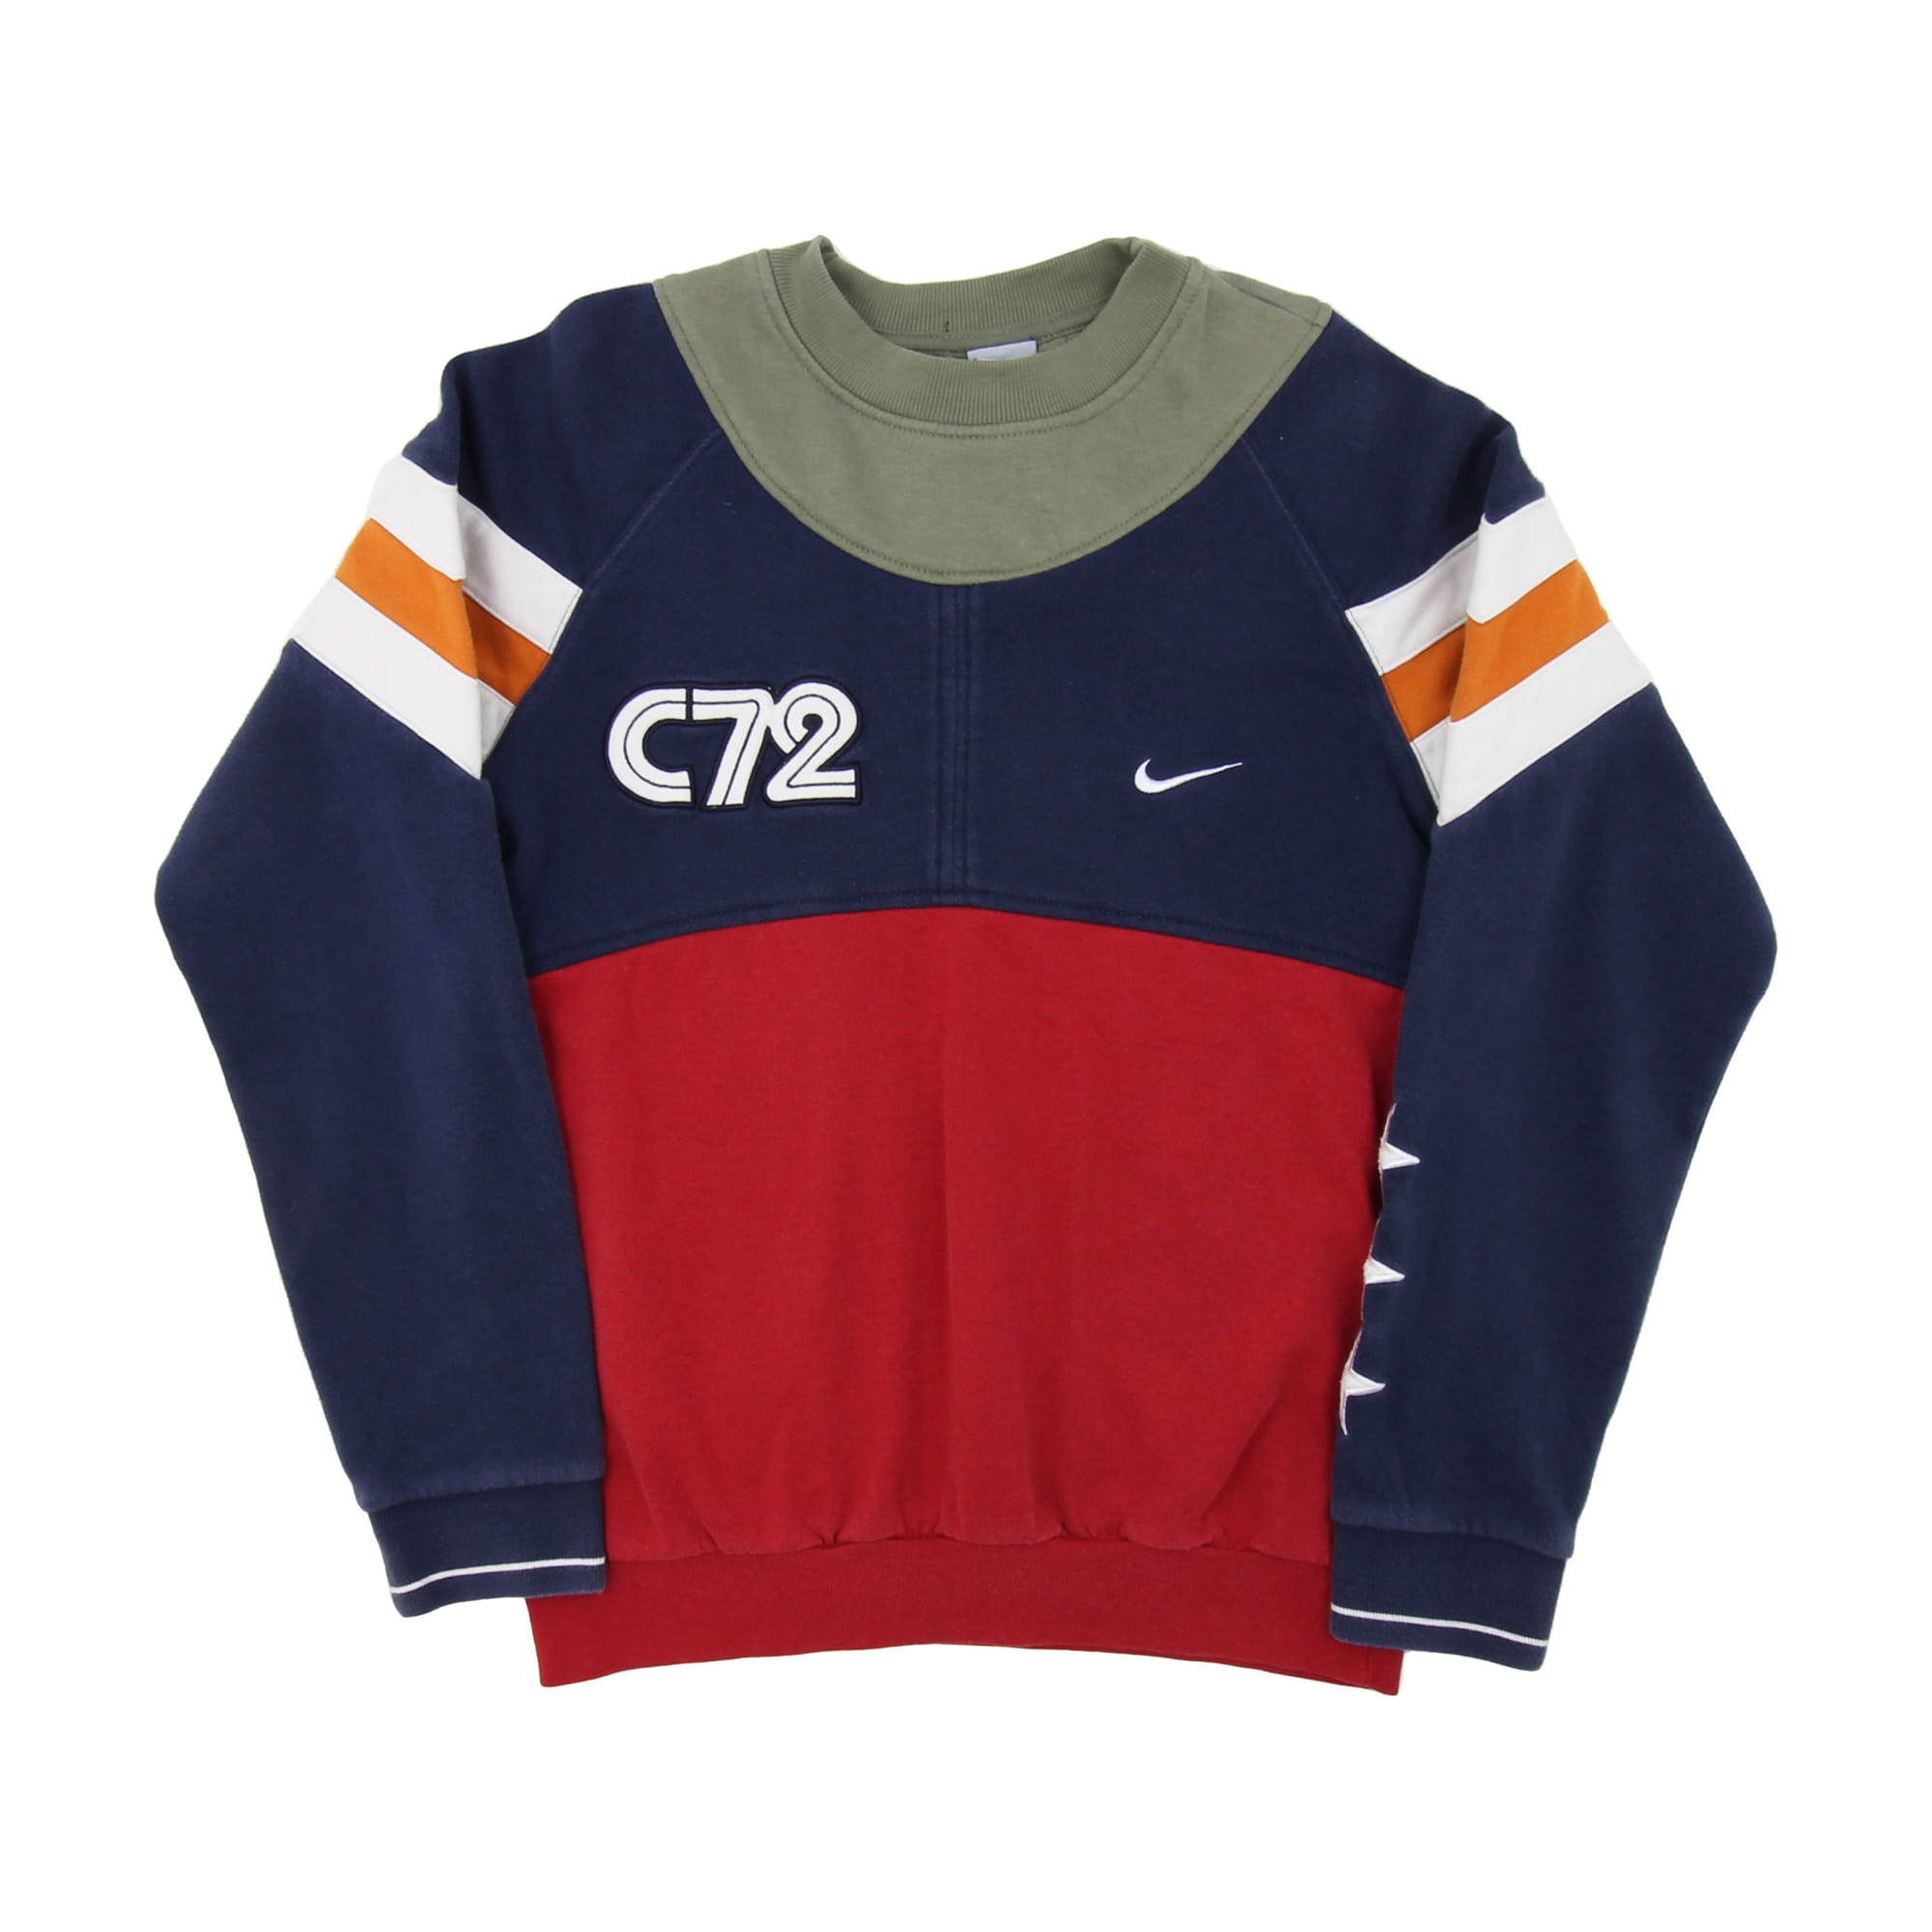 Nike C72 Rework Sweatshirt - S2000